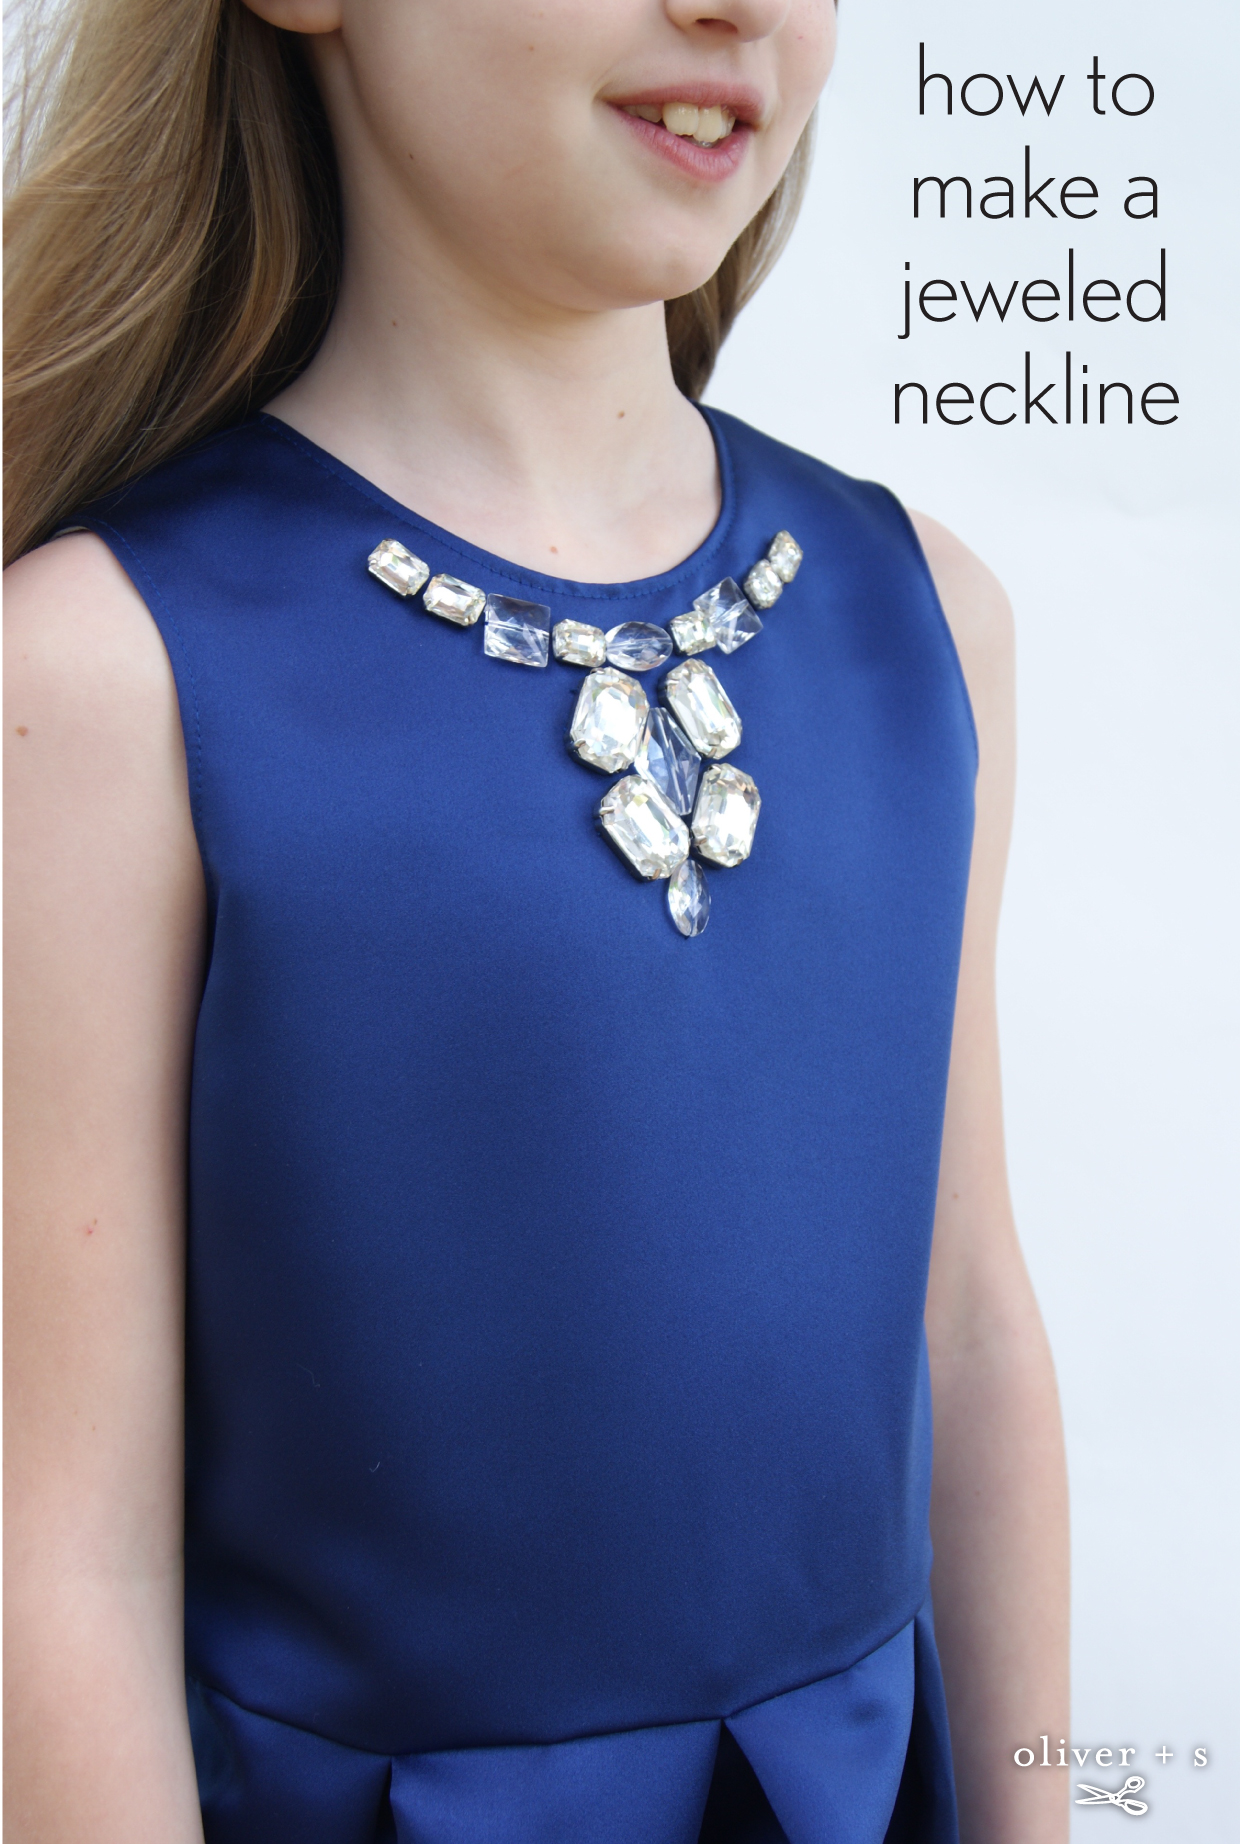 How to Make a Jeweled Neckline | Blog | Oliver + S